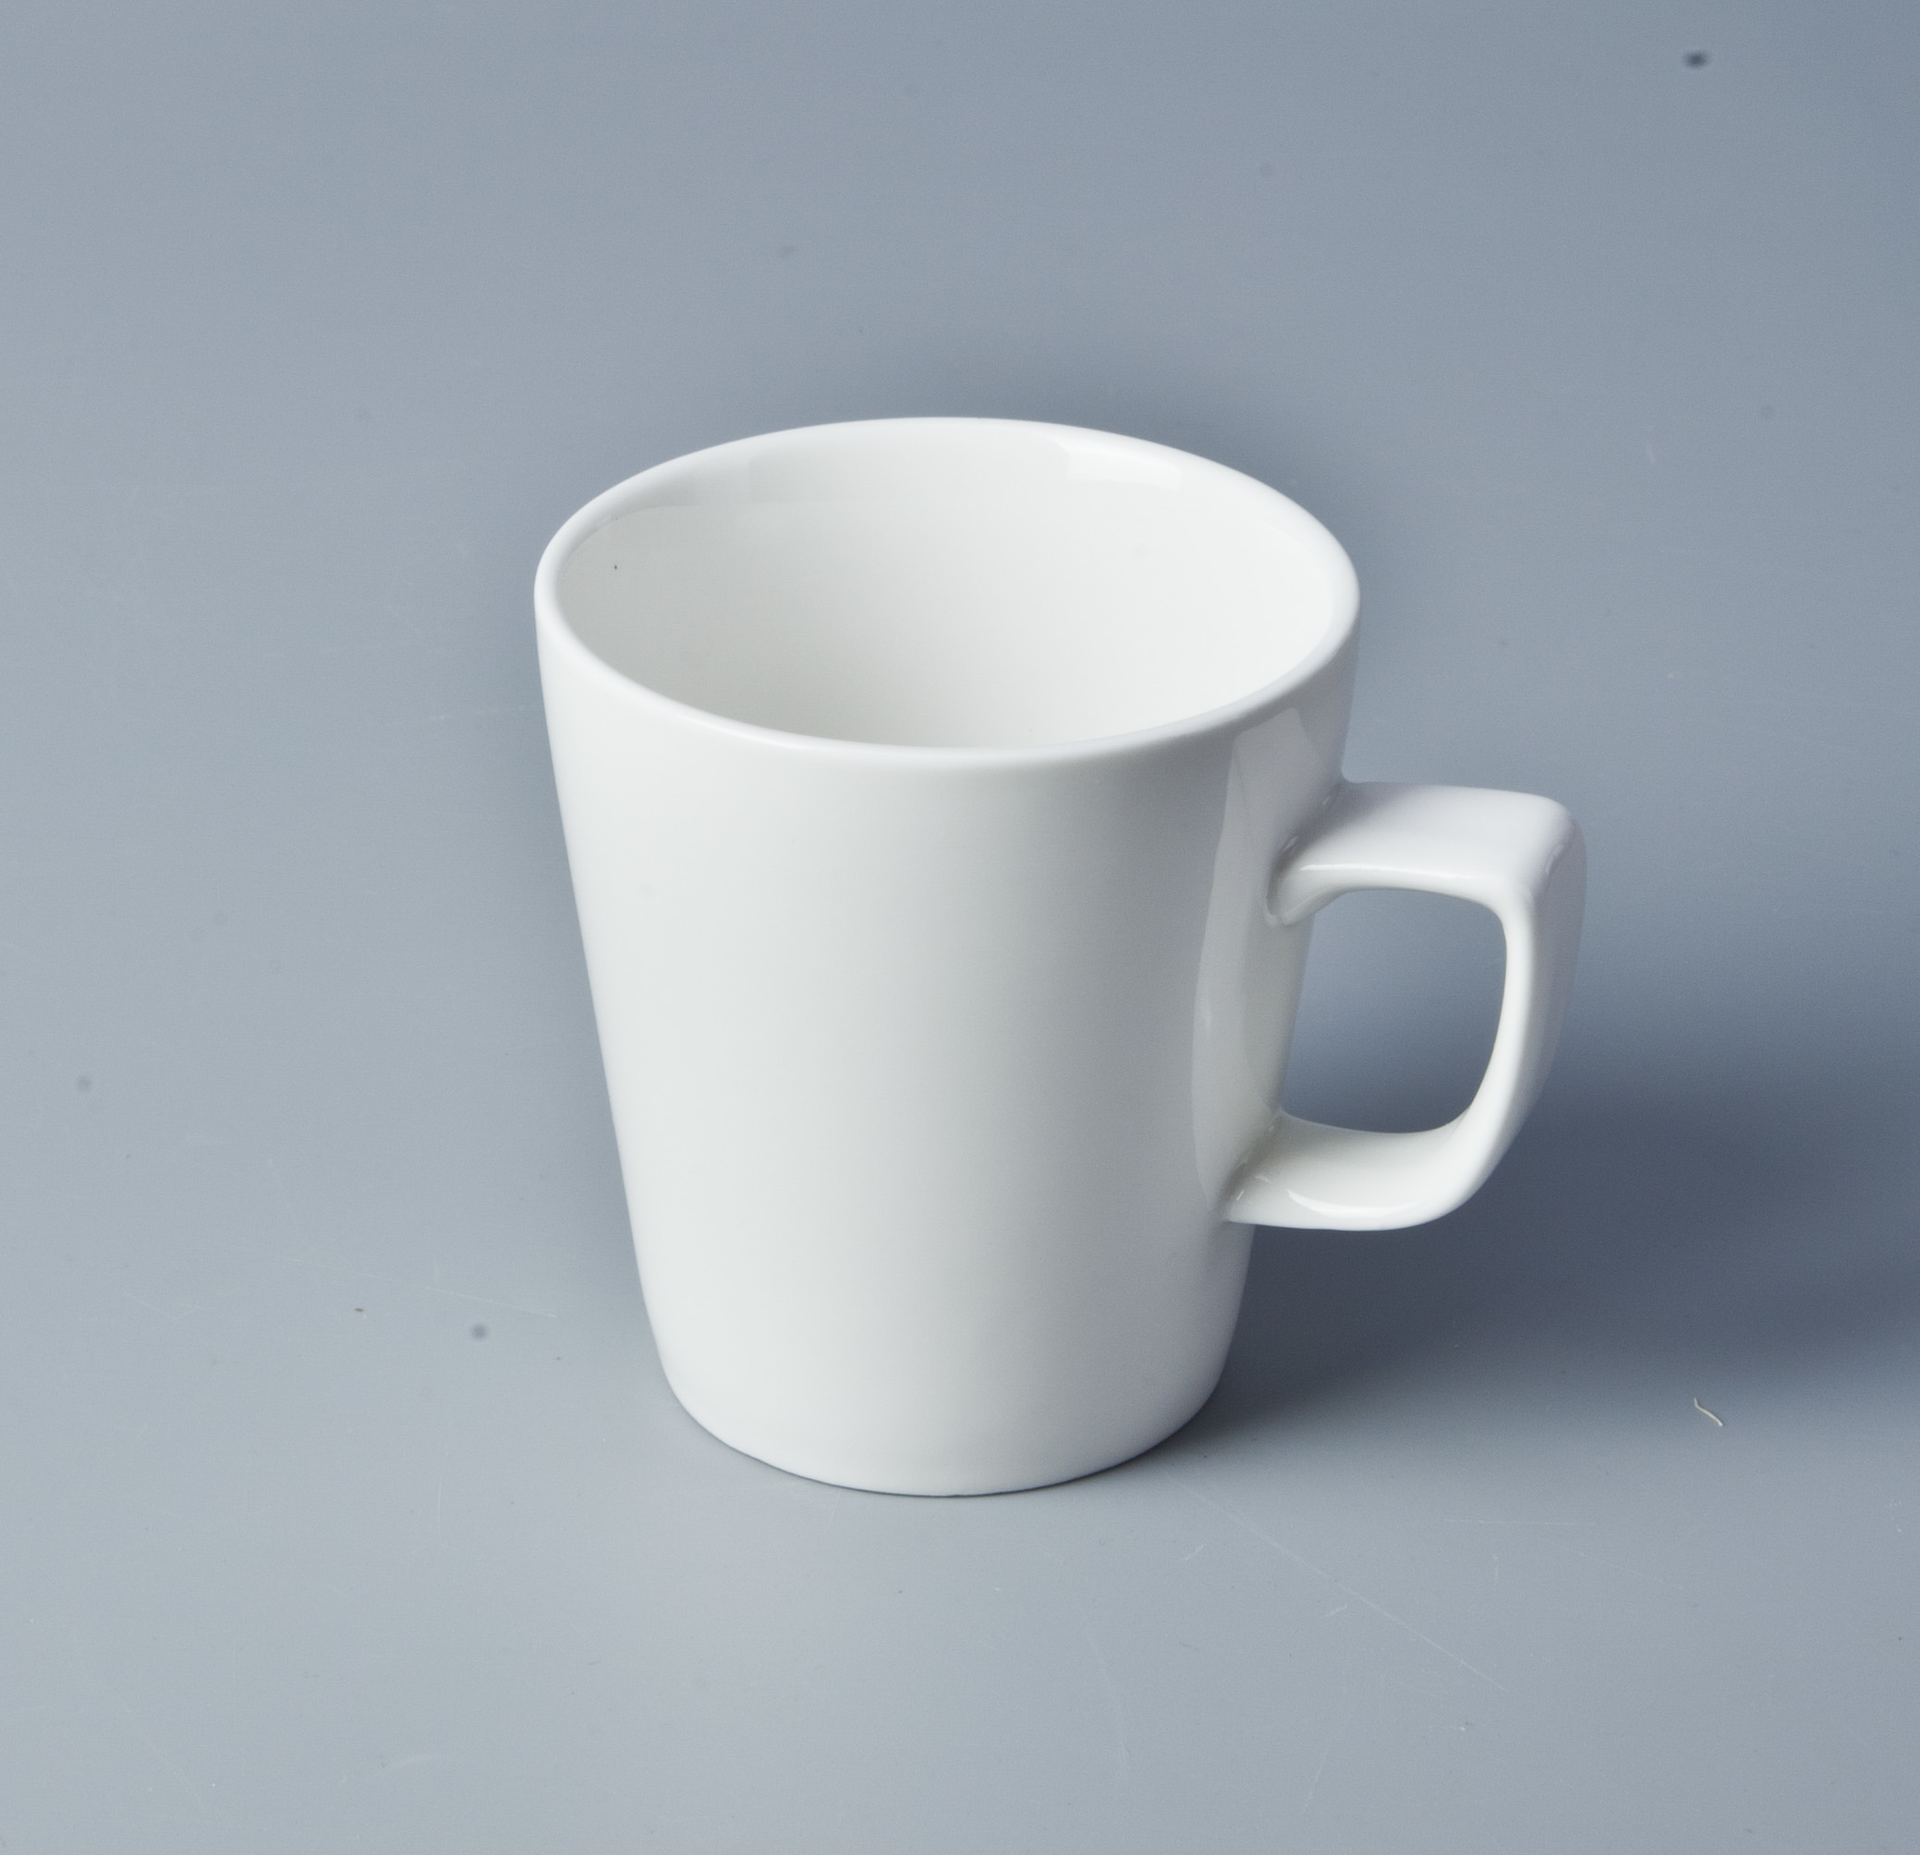 High temperature china porcelain hotel resorts use coffee mugs